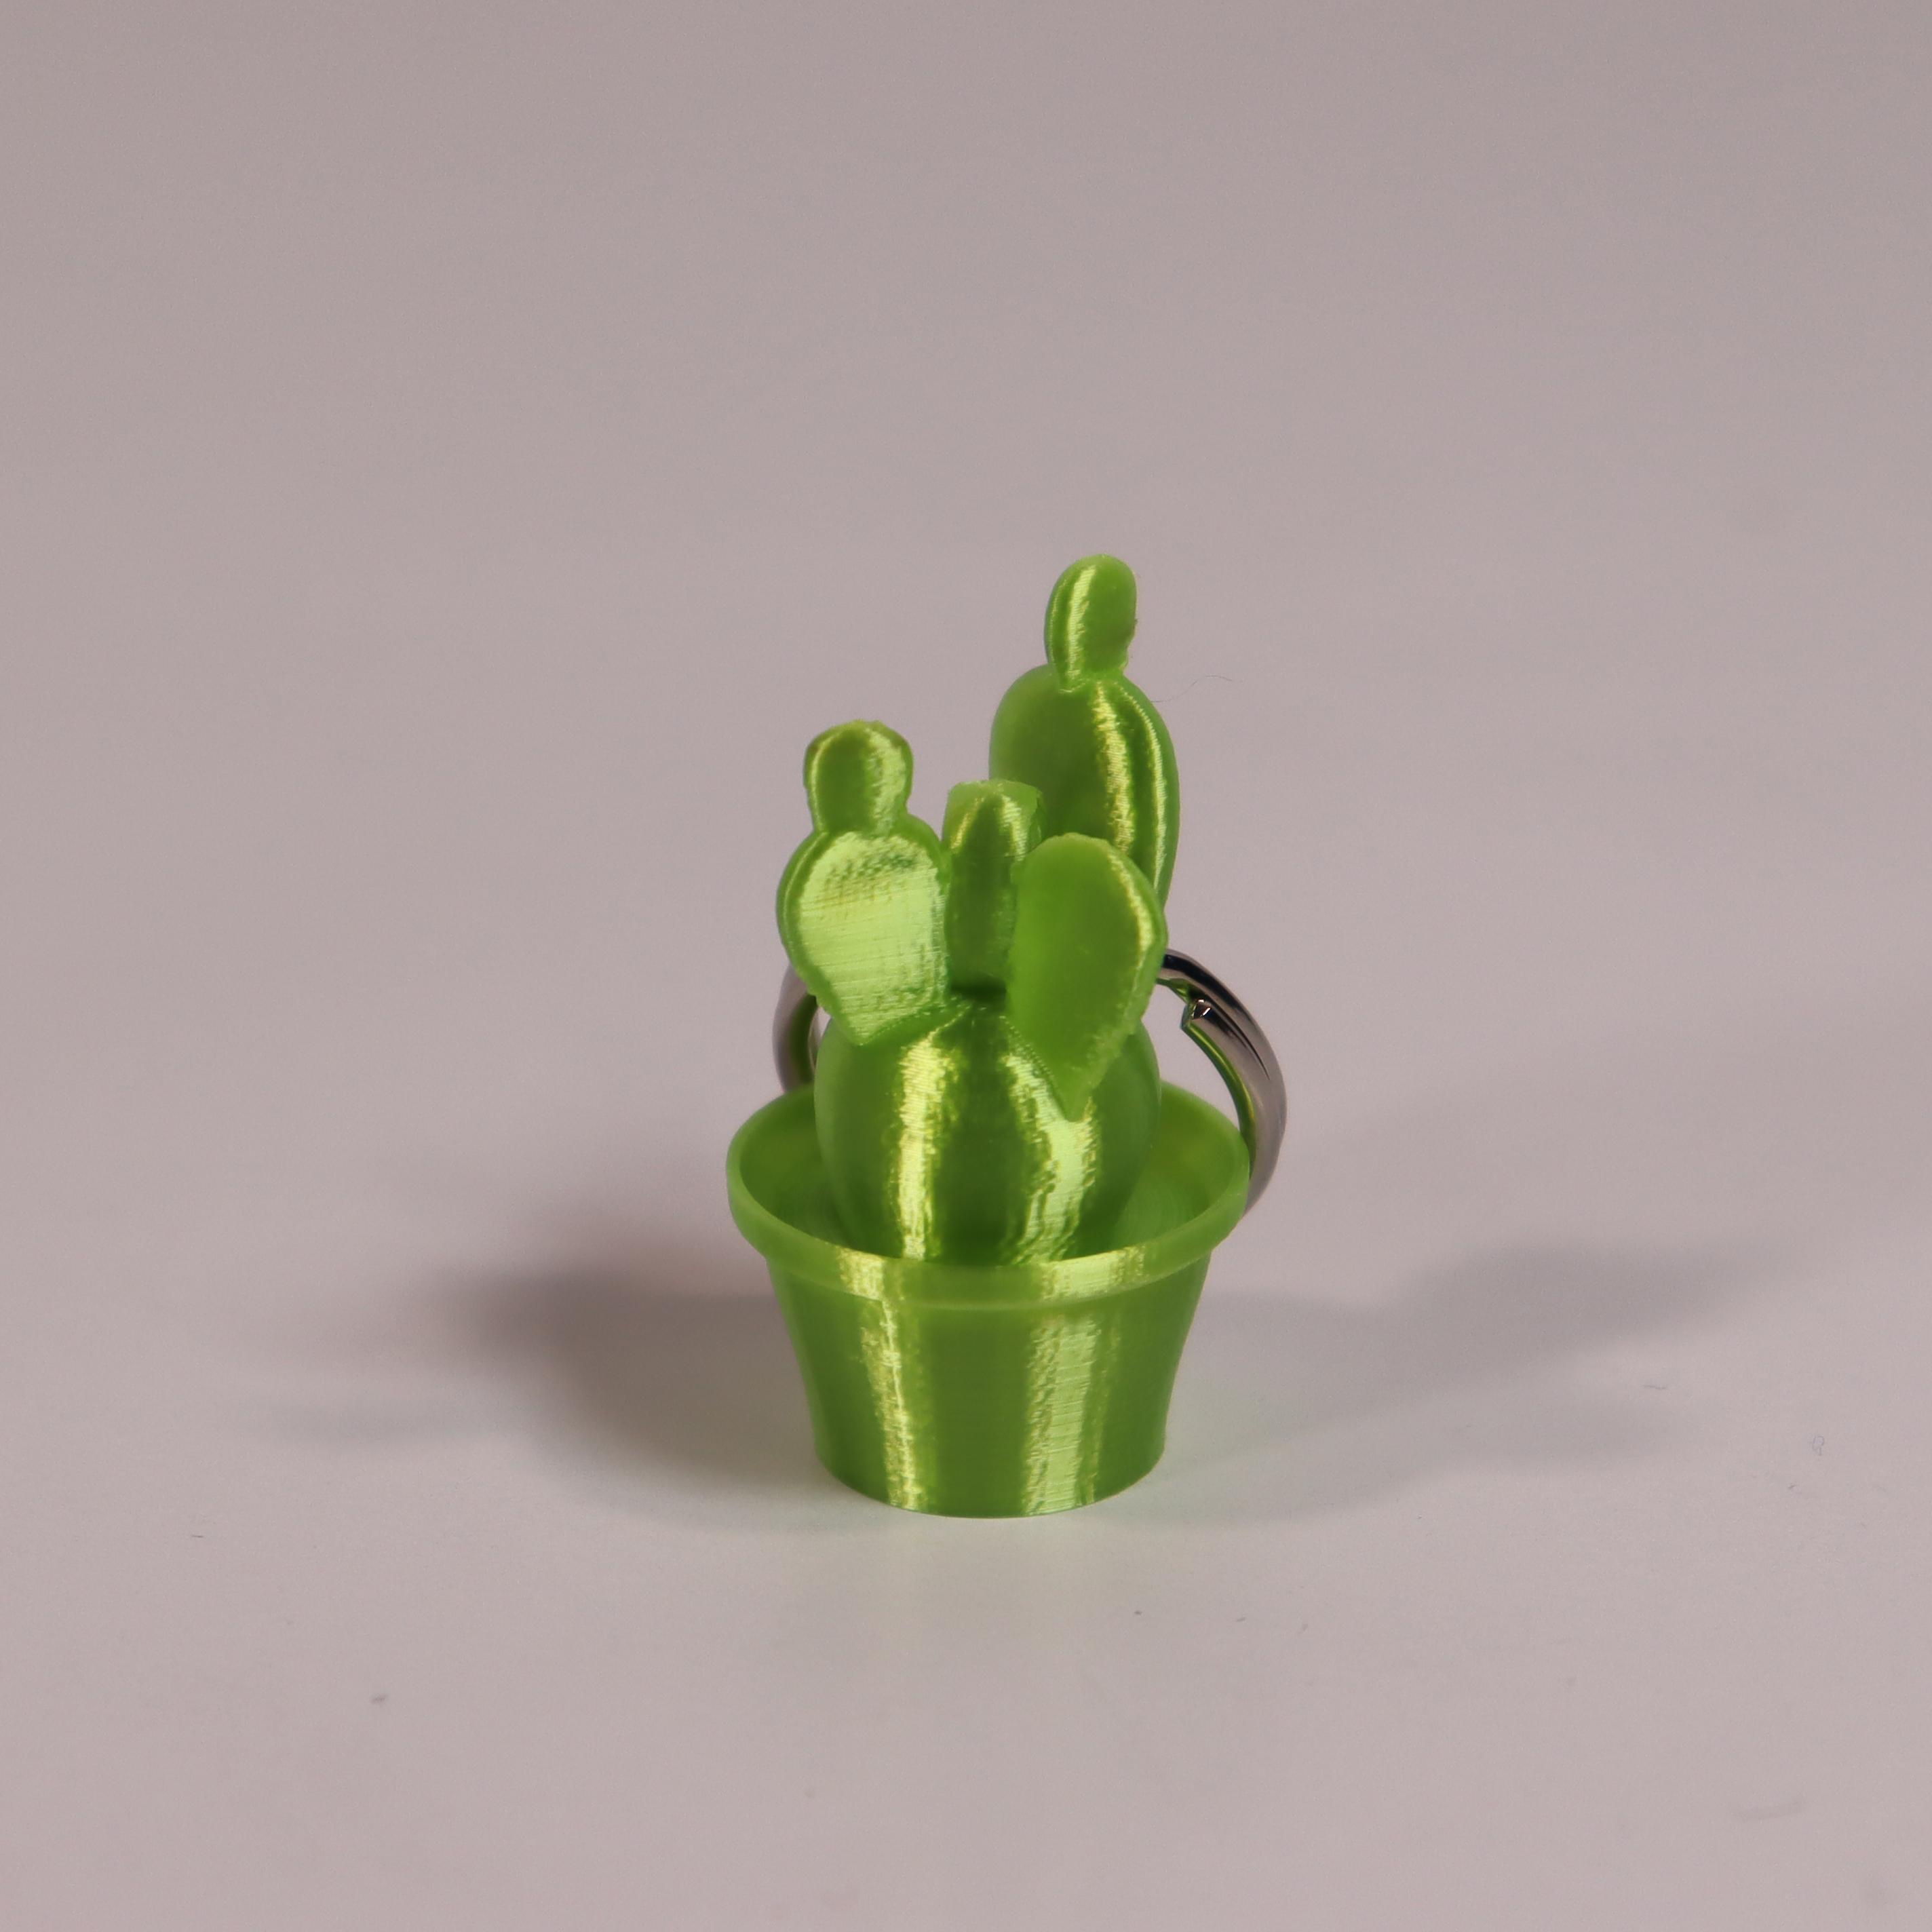 Cactus bunny ears keyring 3d model